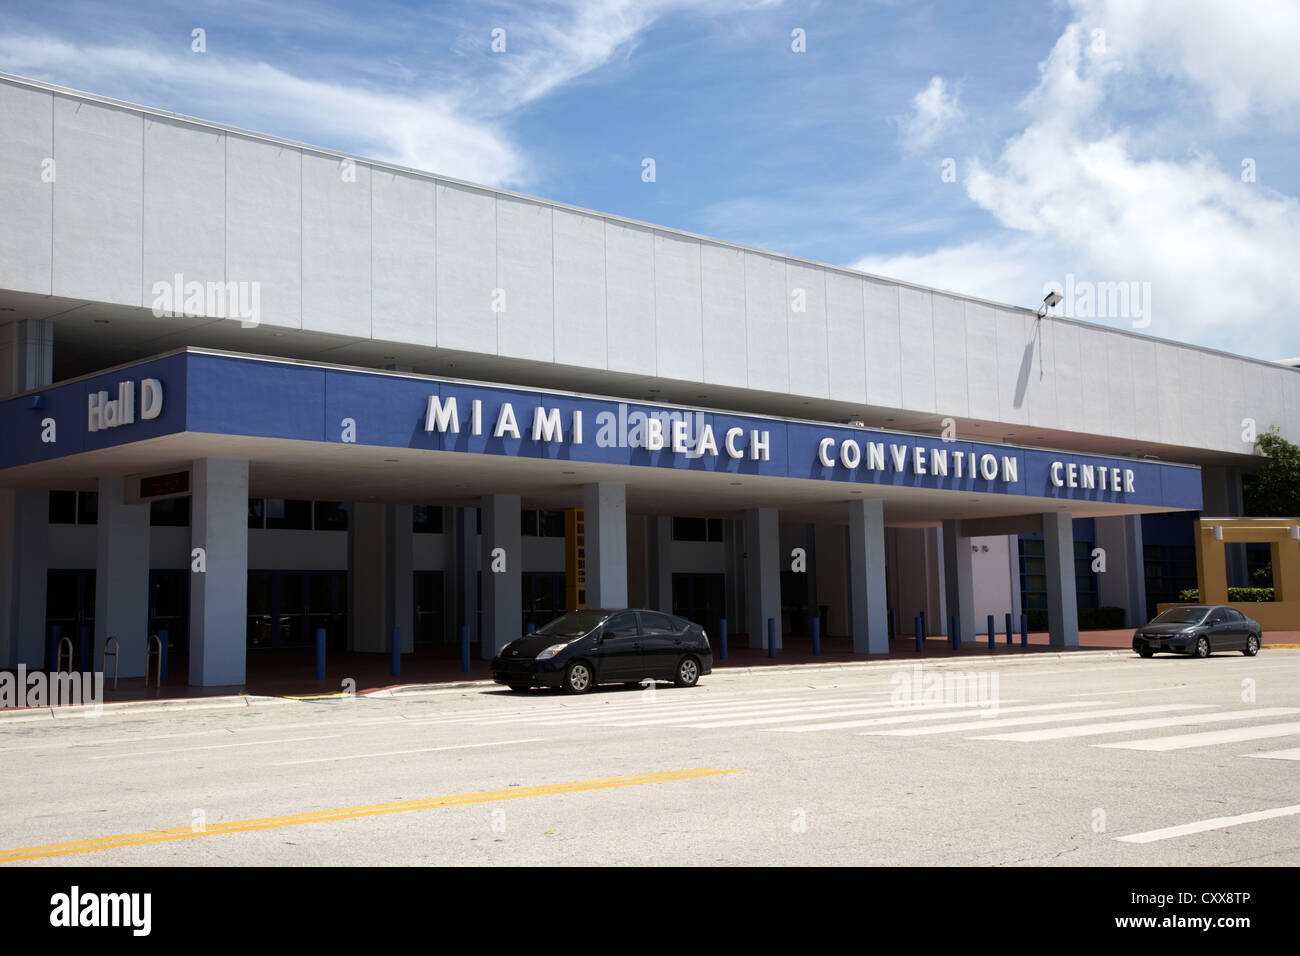 Miami Beach Convention Center Miami South beach floride usa Banque D'Images